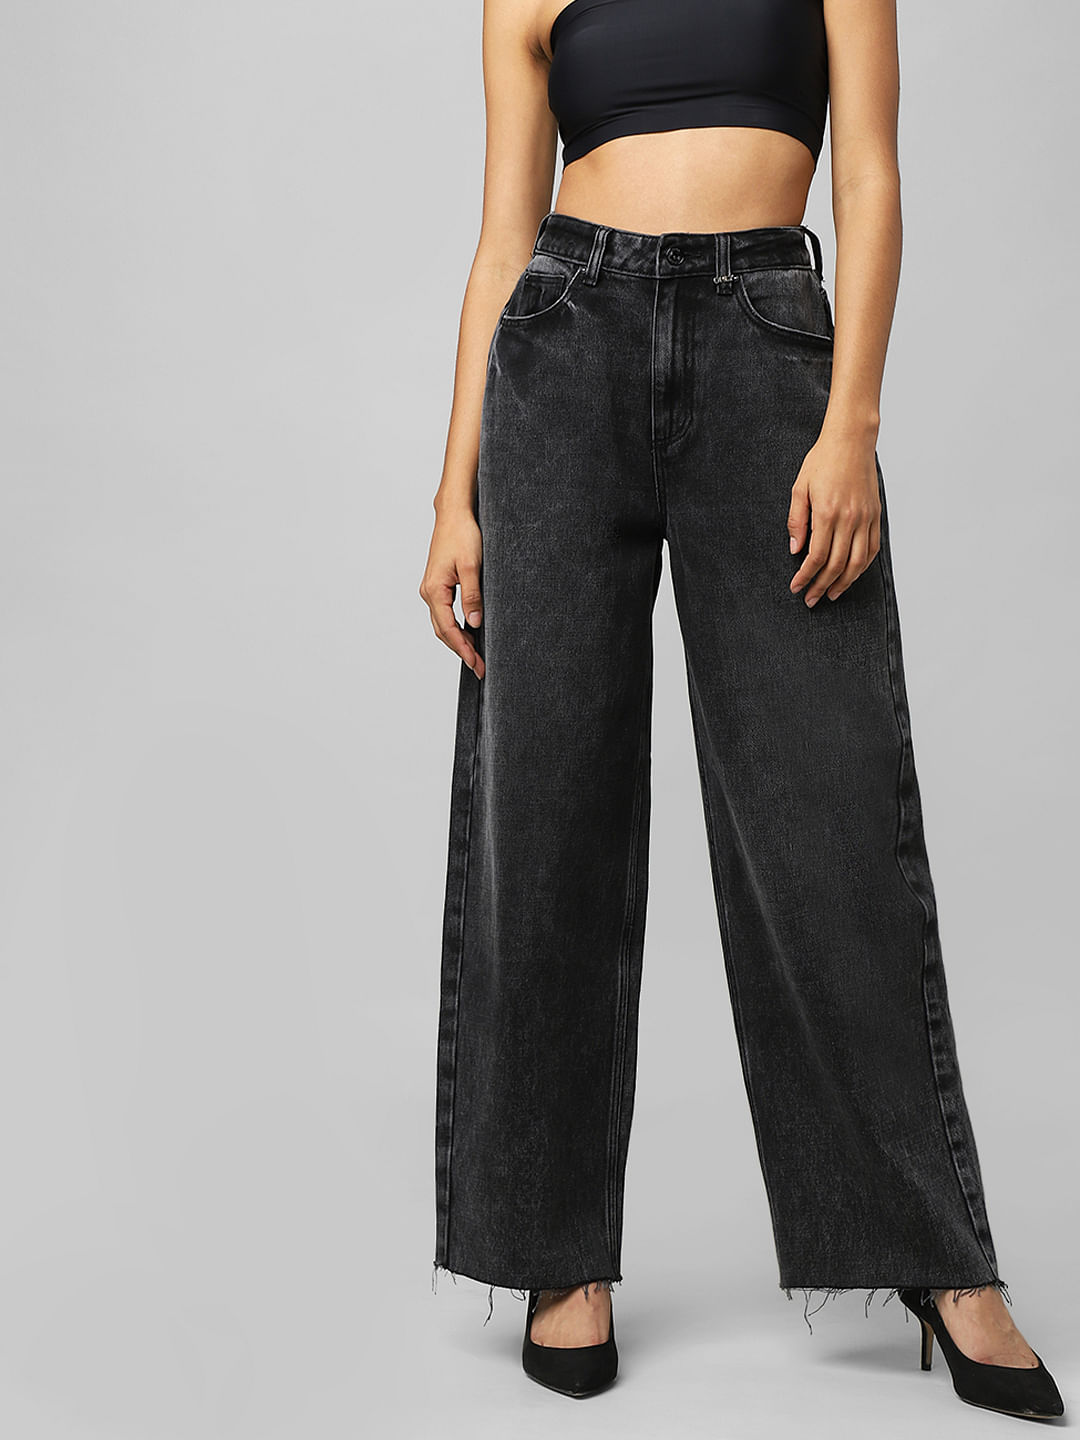 Plt Shape Black Super Stretch Denim Jeans | PrettyLittleThing